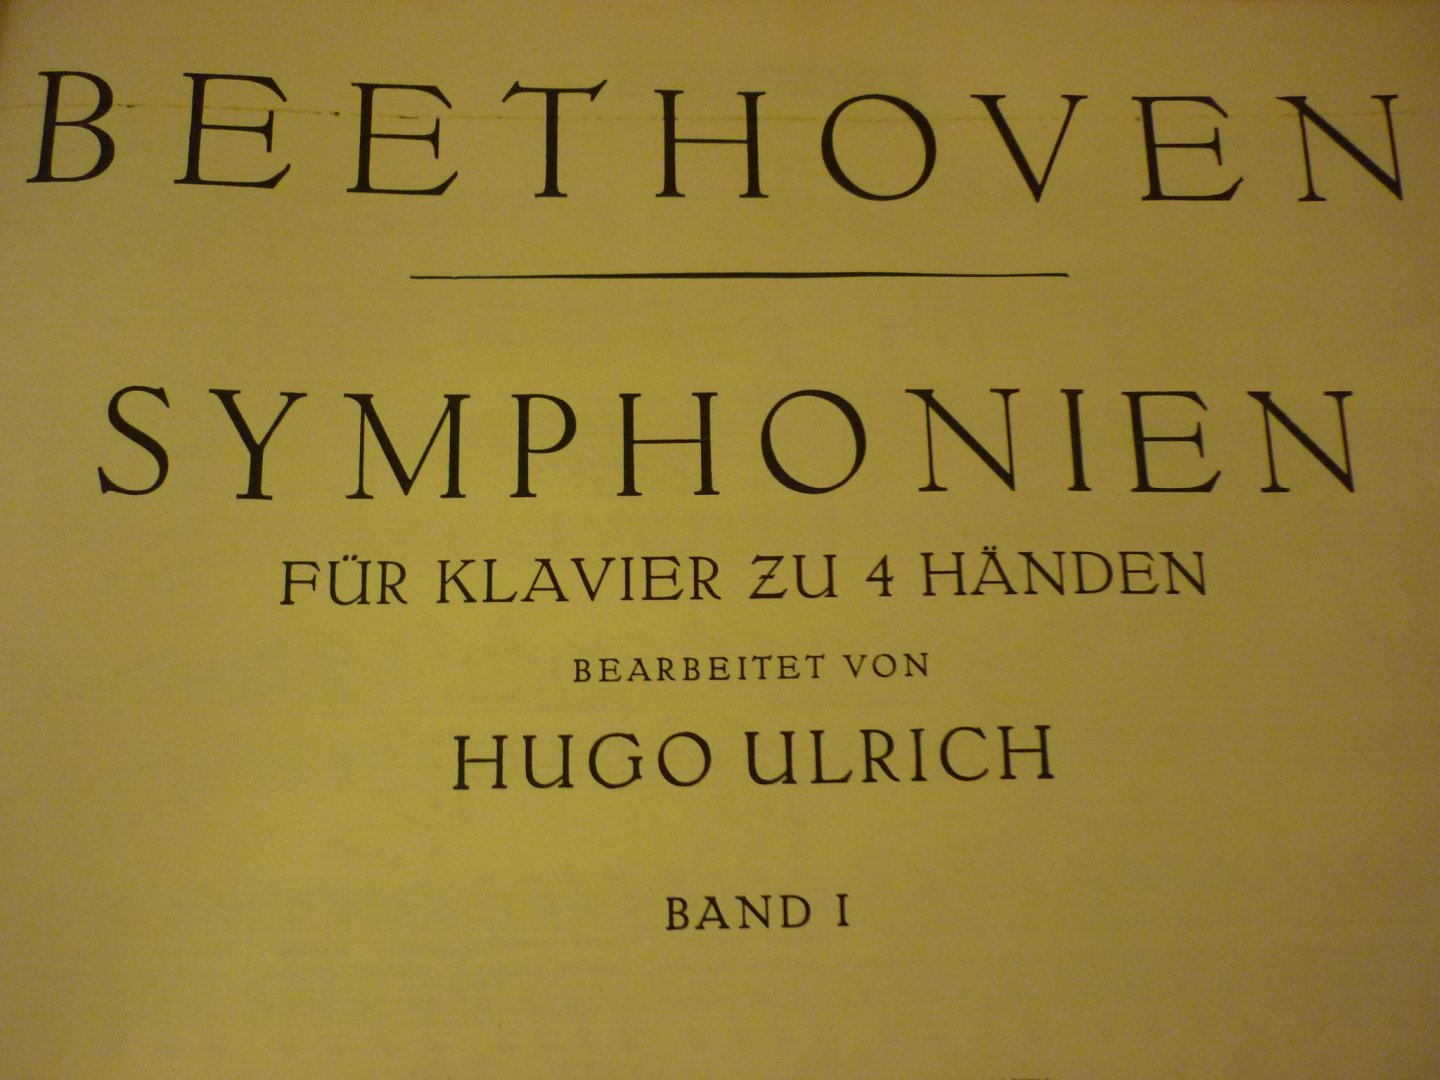 Beethoven; Ludwig von (1770 – 1827) - Symphonien zu 4 Handen; Band I; No 1 - 5  (Hugo Ulrich)